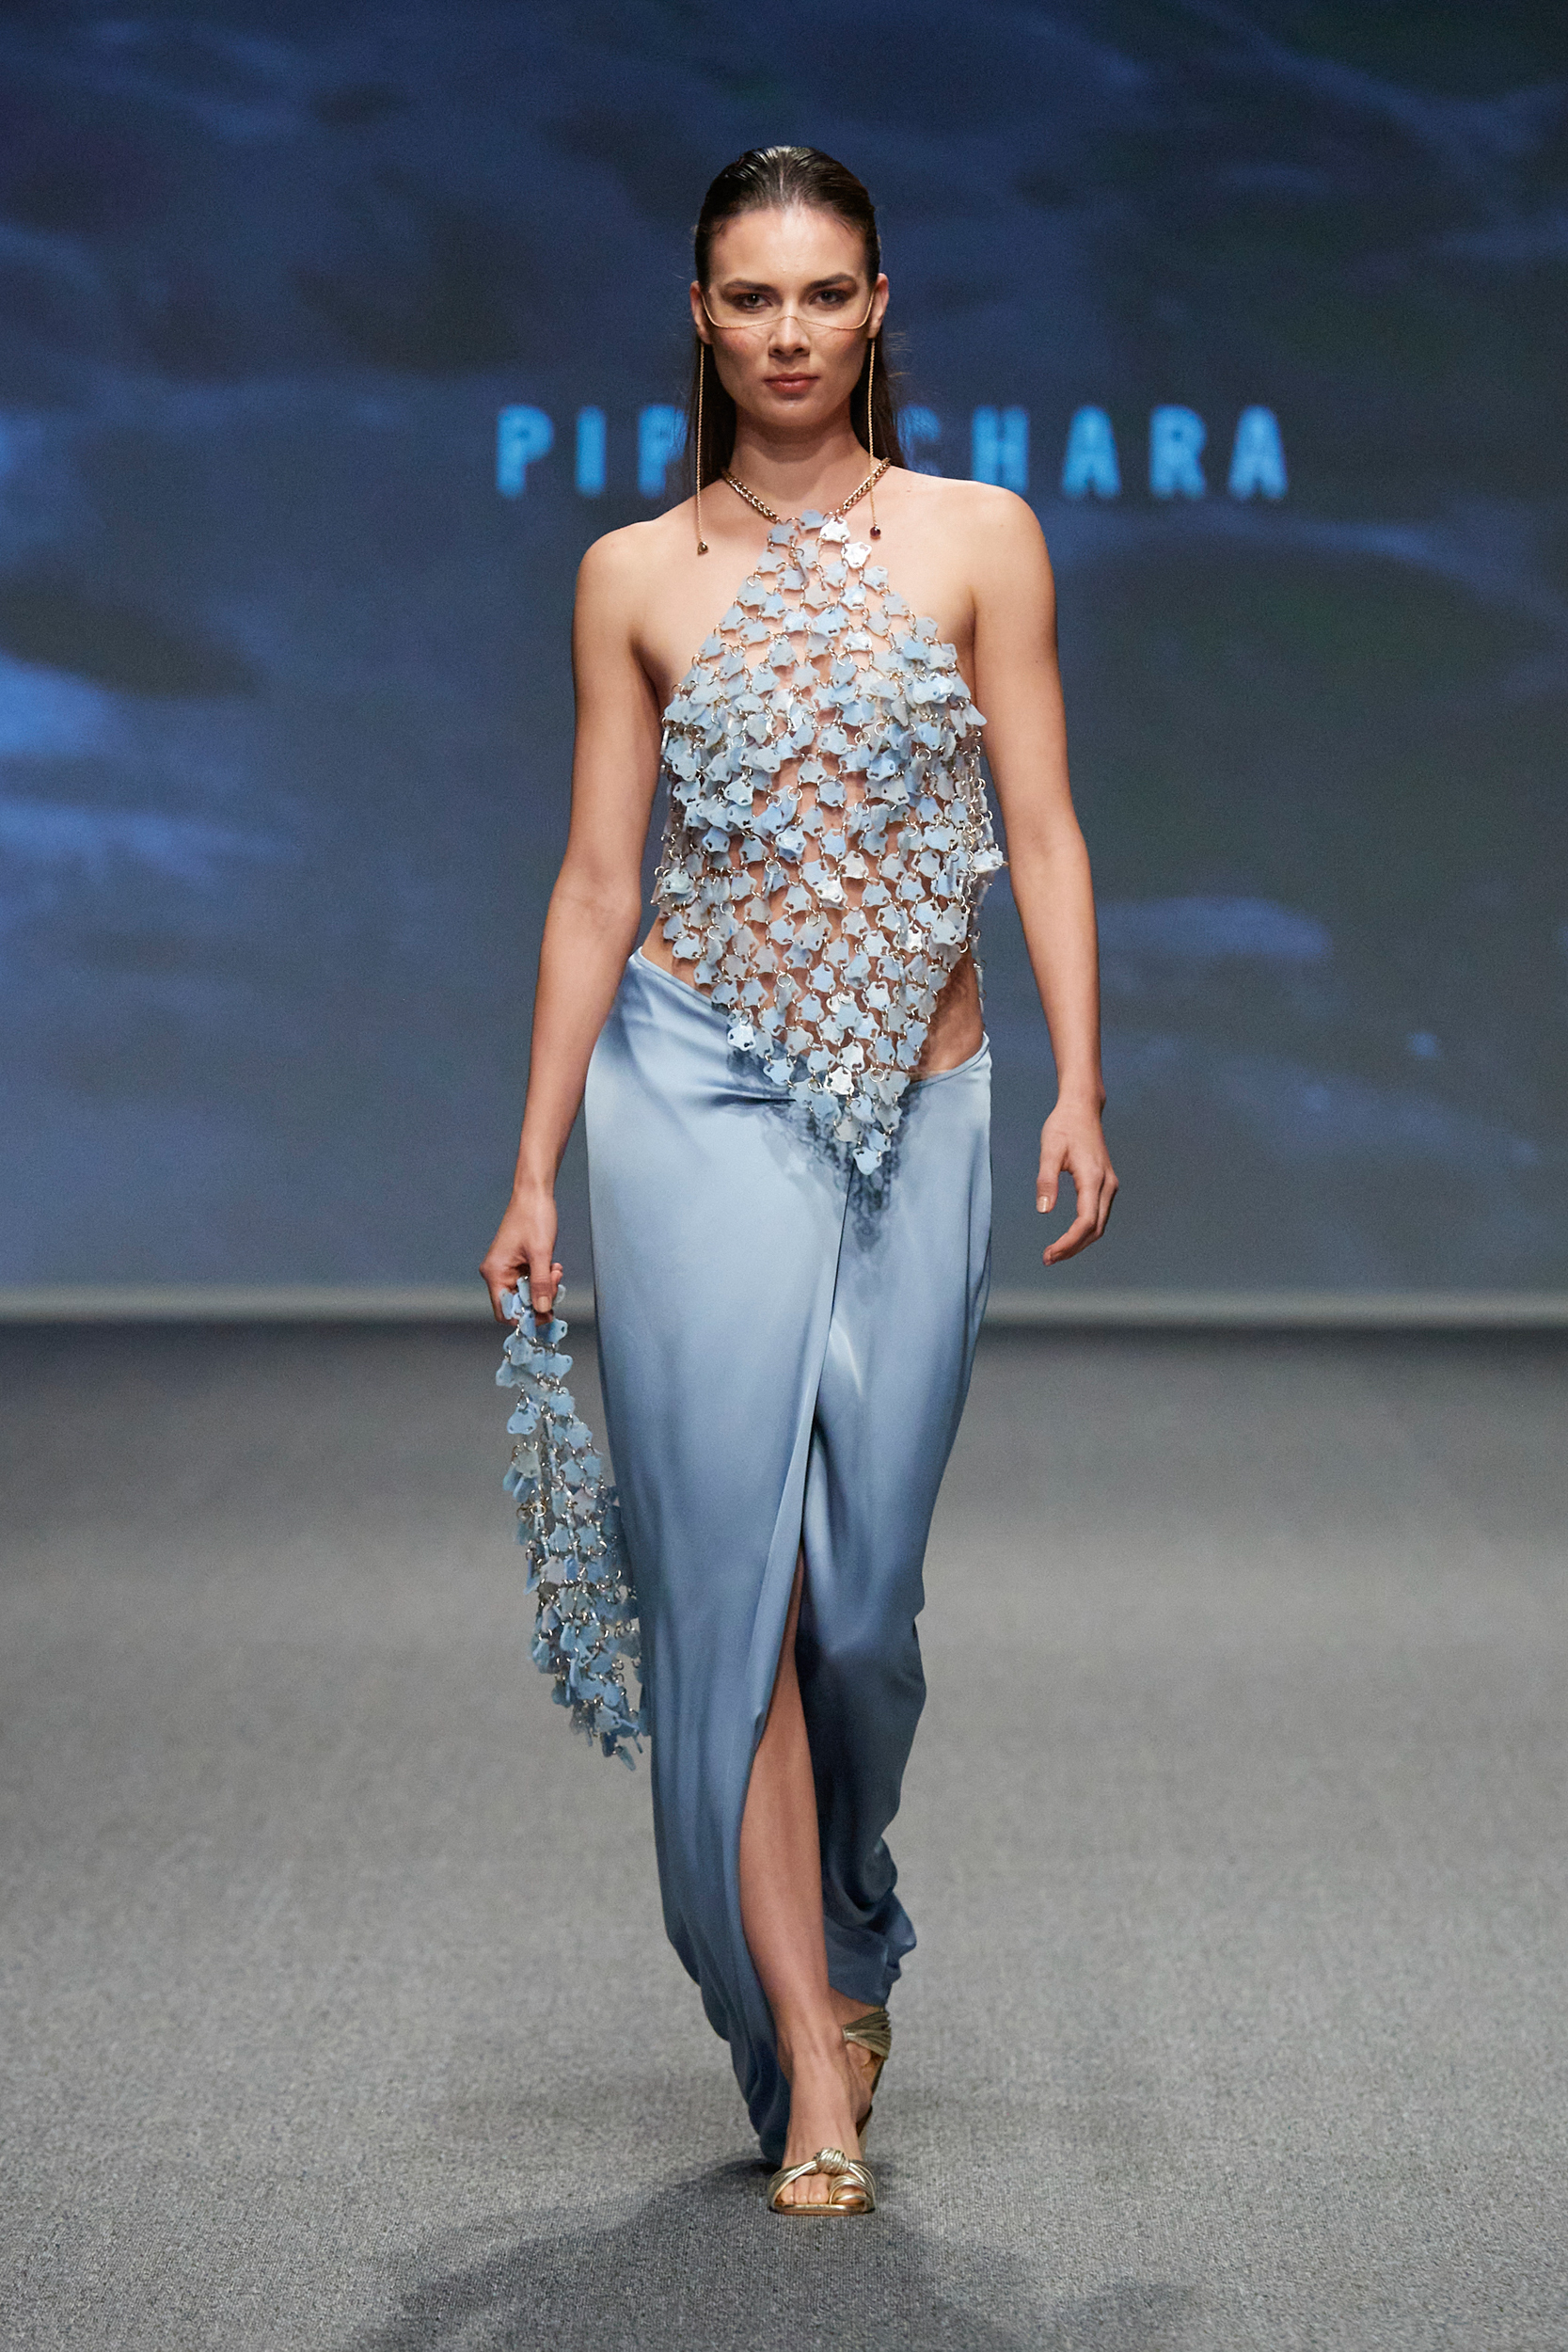 Pipatchara Fall 2022 Couture Fashion Show 